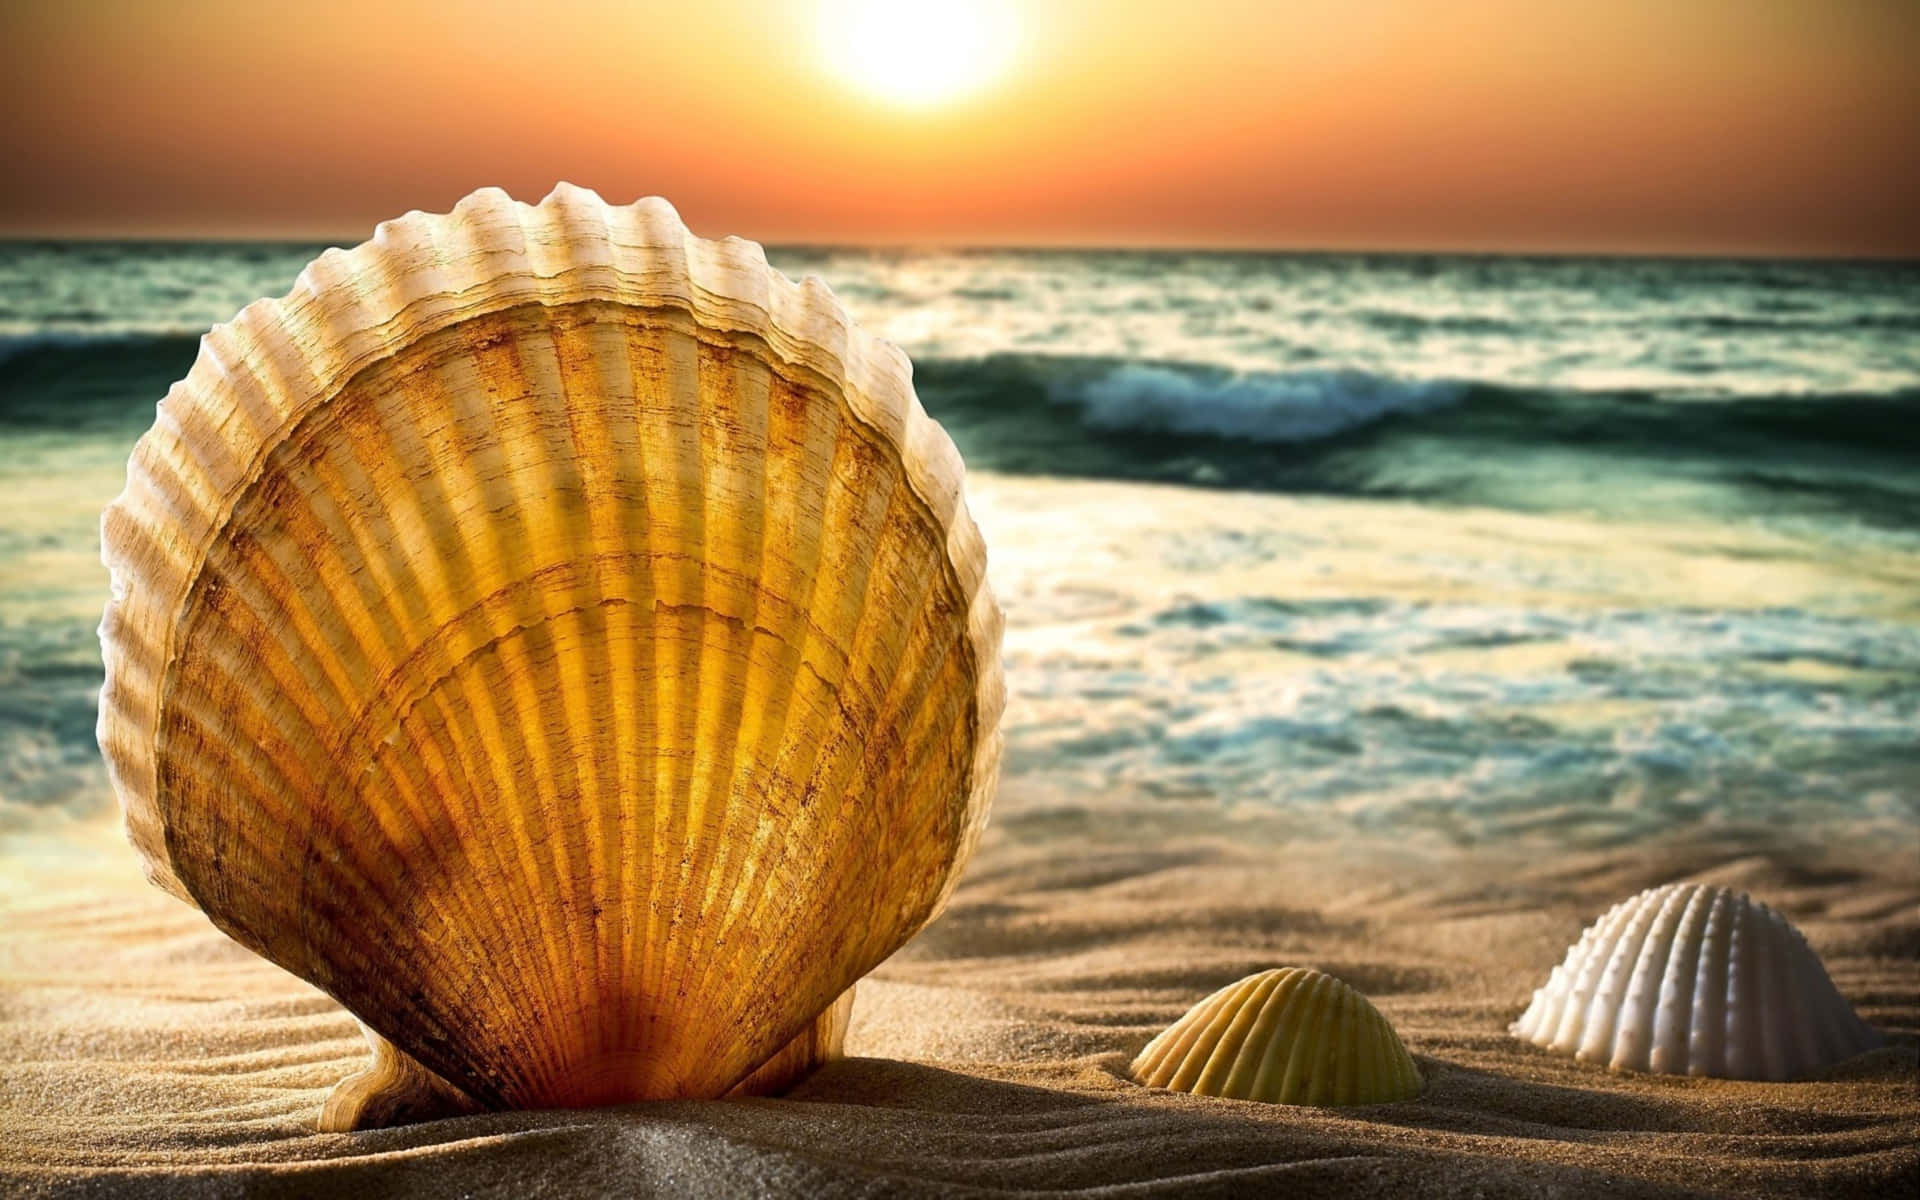 Stunning Spiral Seashell on the Shore